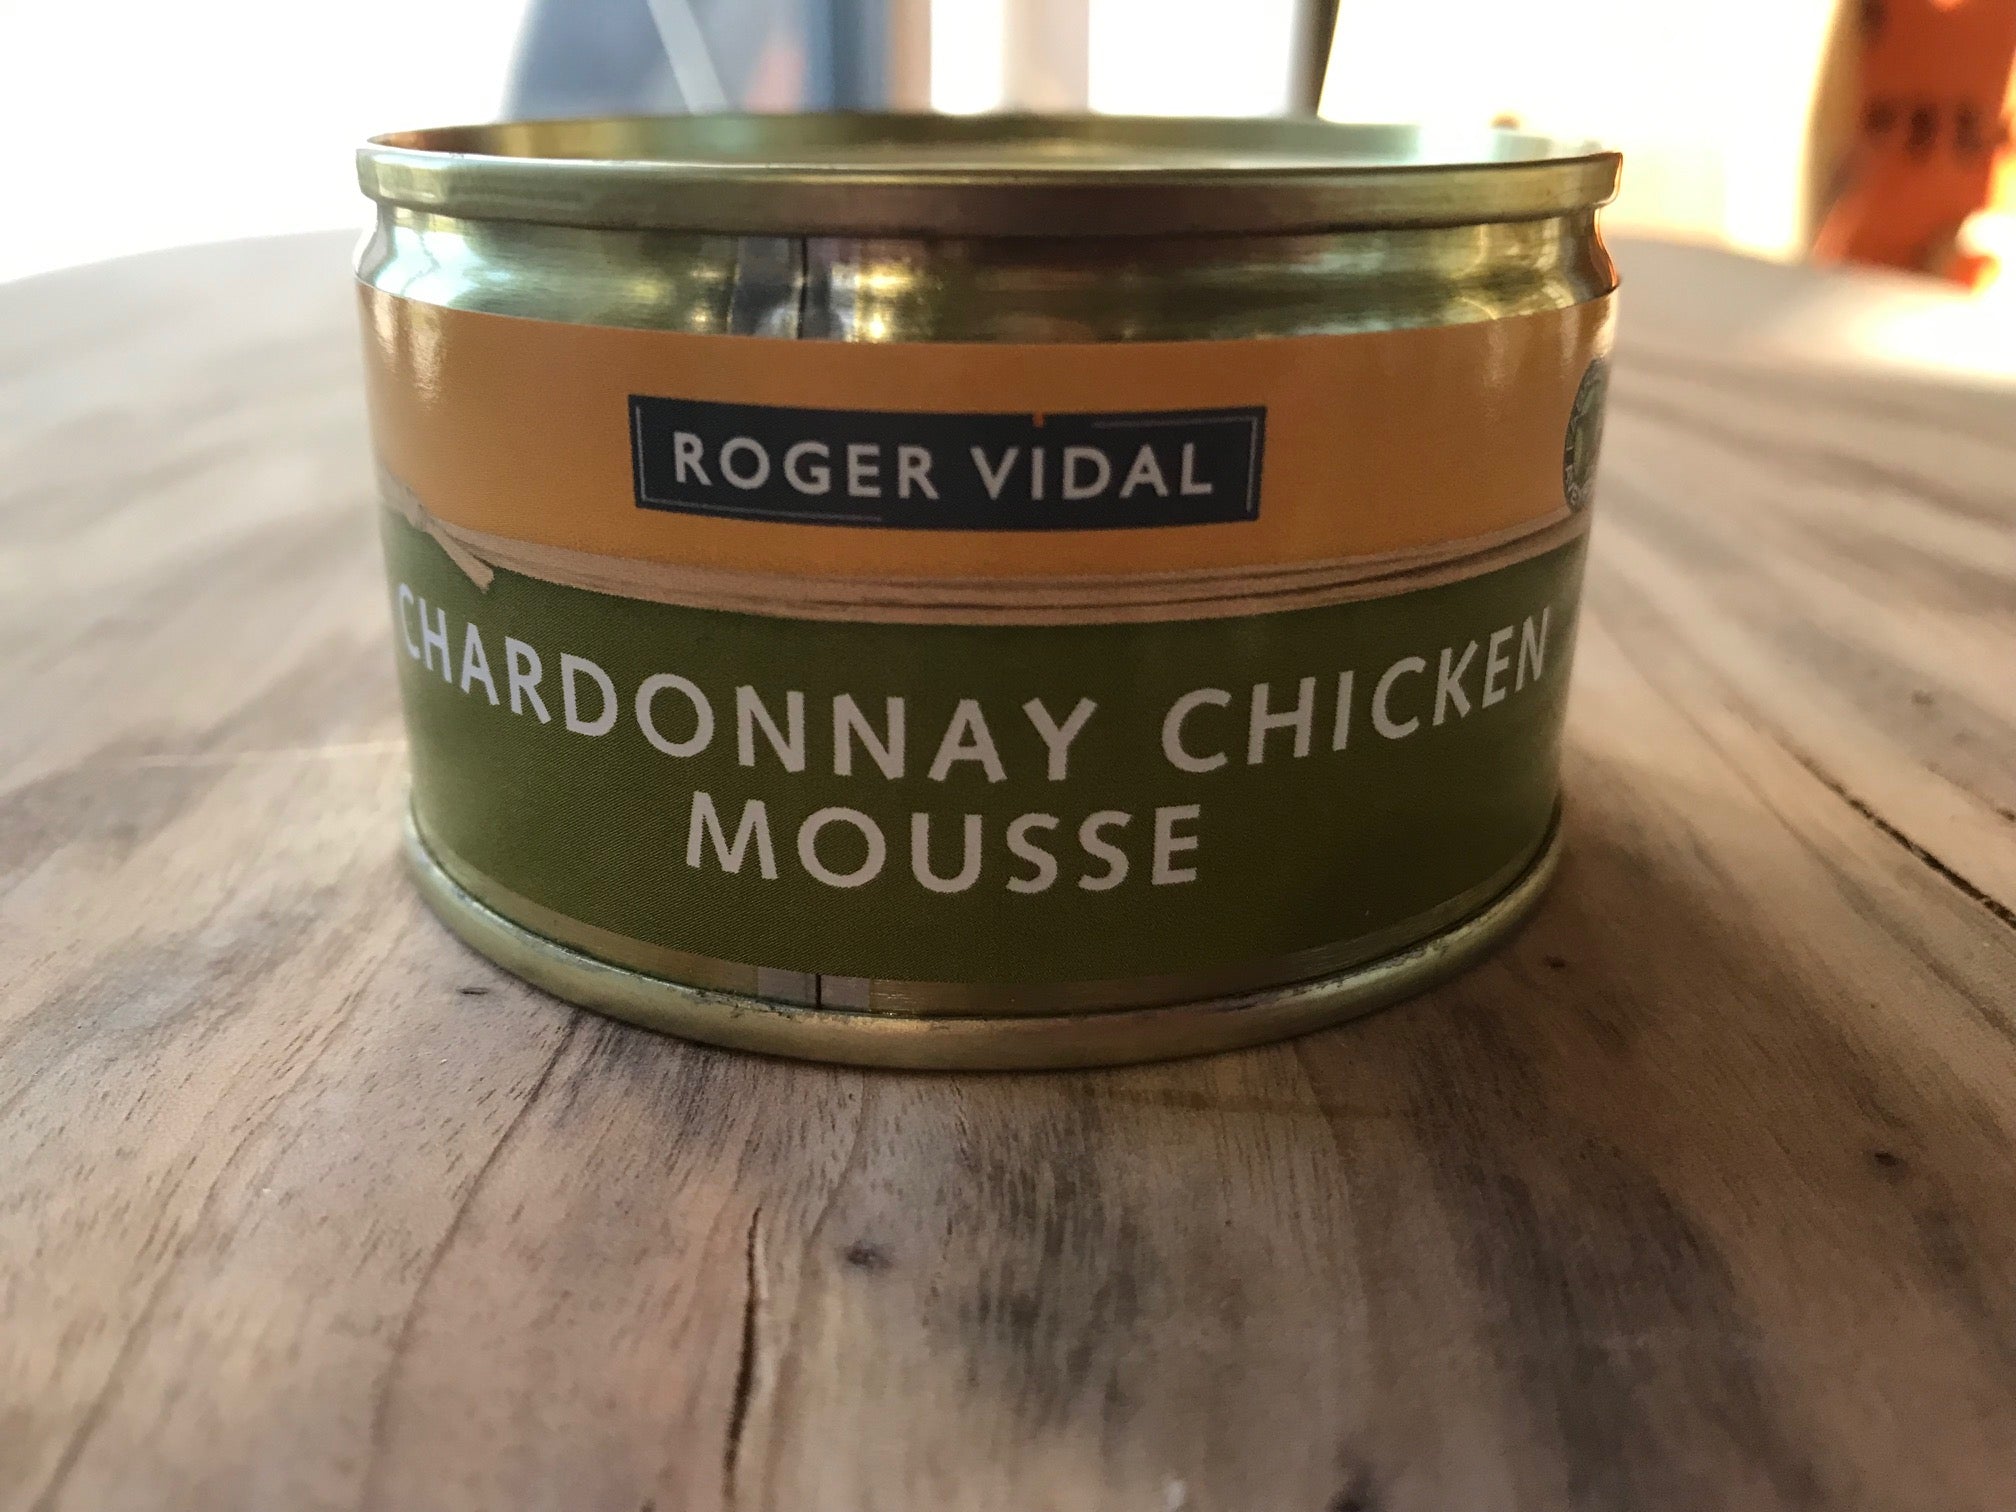 Roger Vidal - Chardonnay Chicken Mousse - 125g